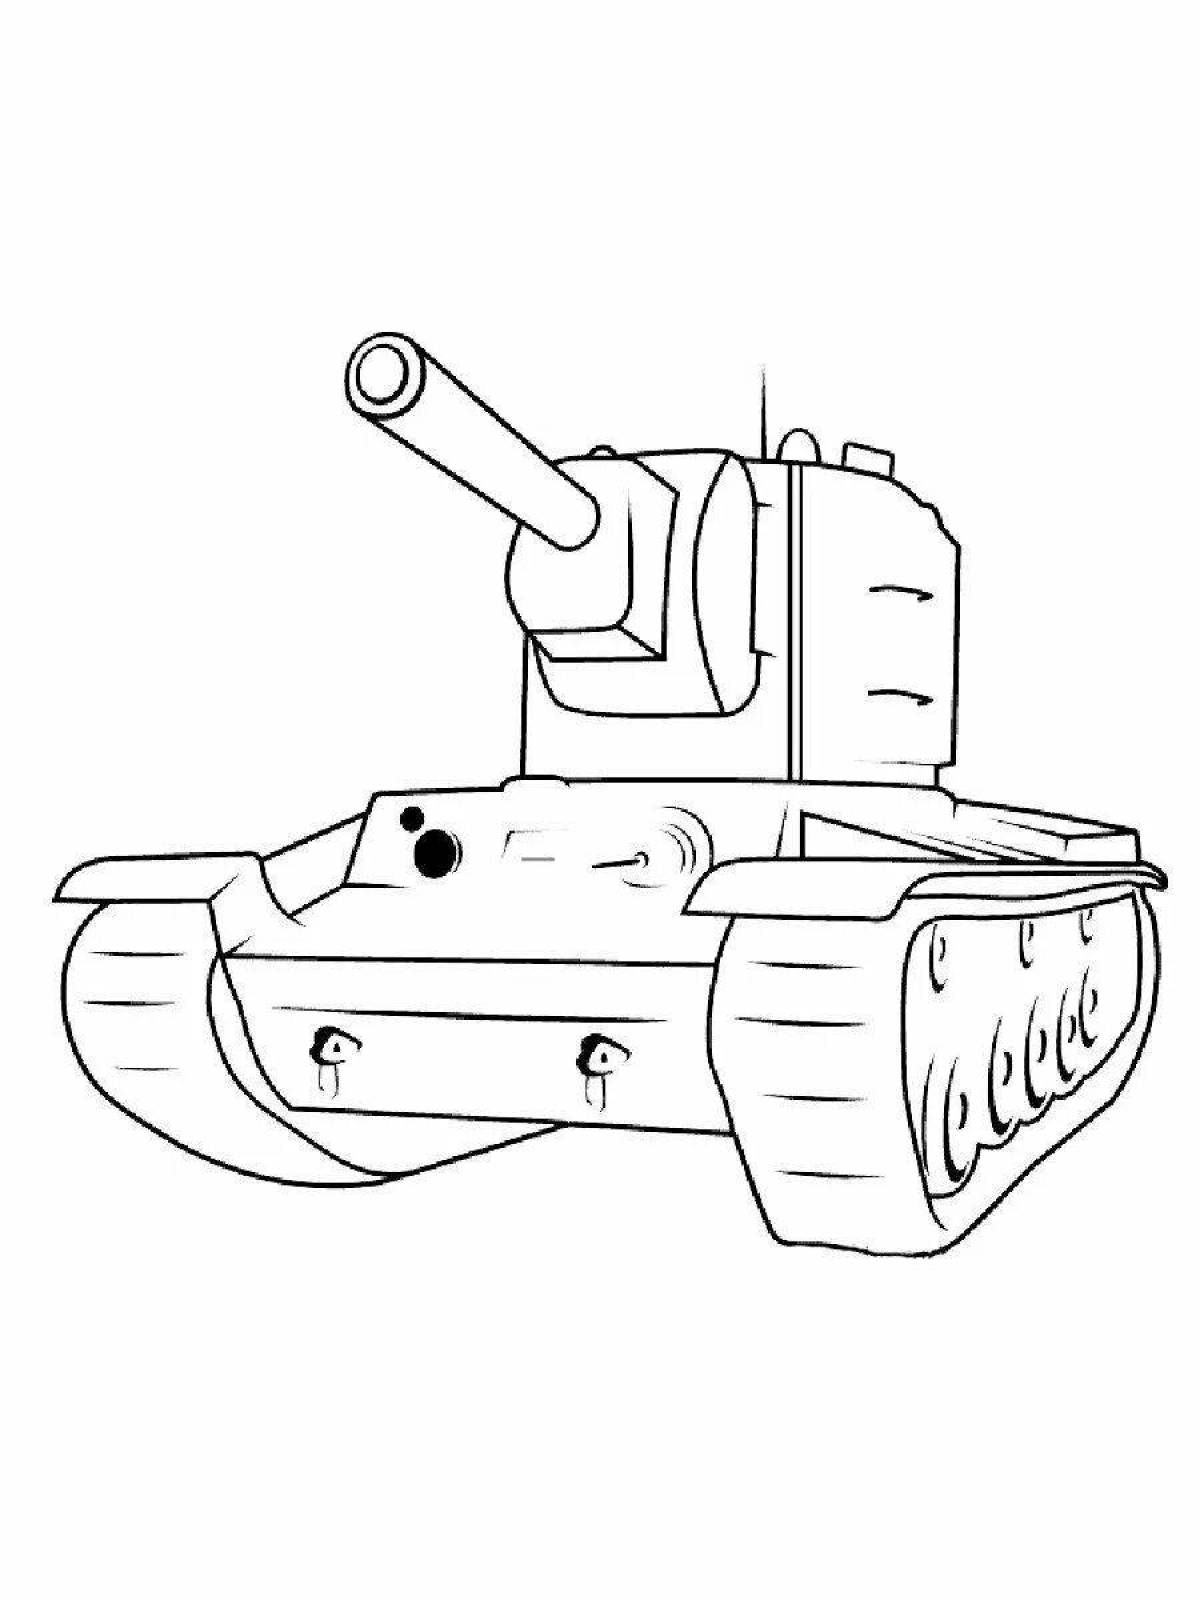 Fascinating coloring of the kv44 tank